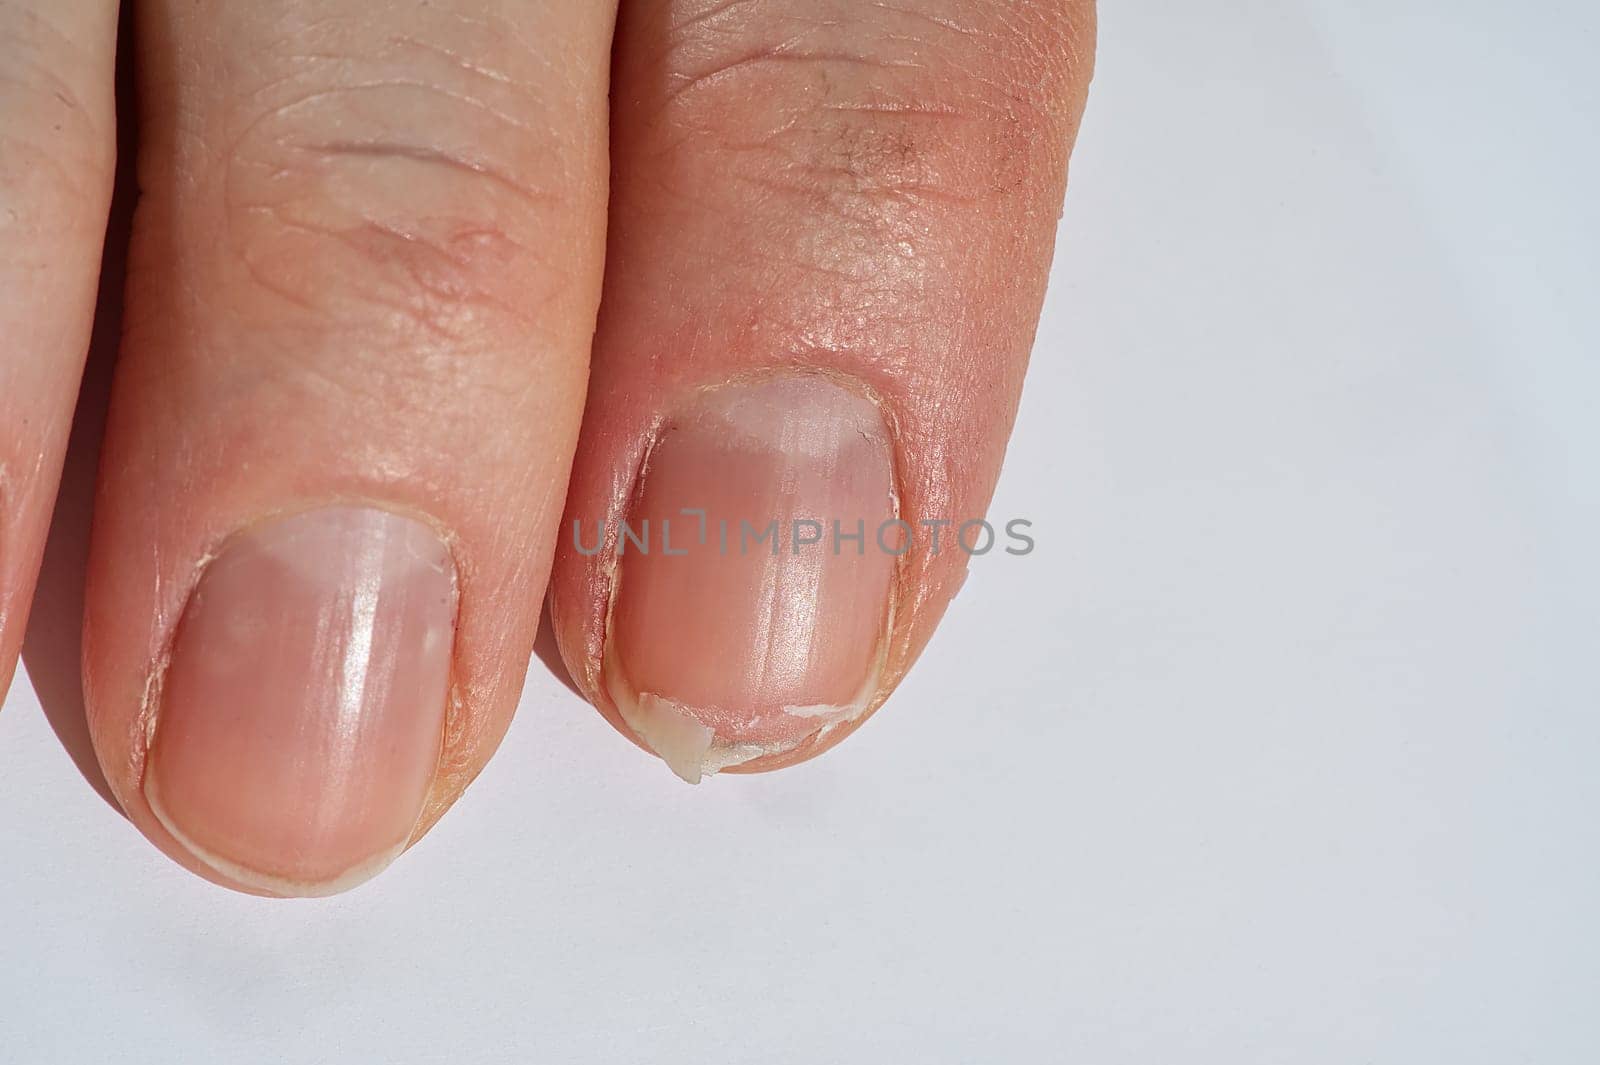 Close-up of brittle nails on woman's hands. Female broken fingernail. weak sore nails.